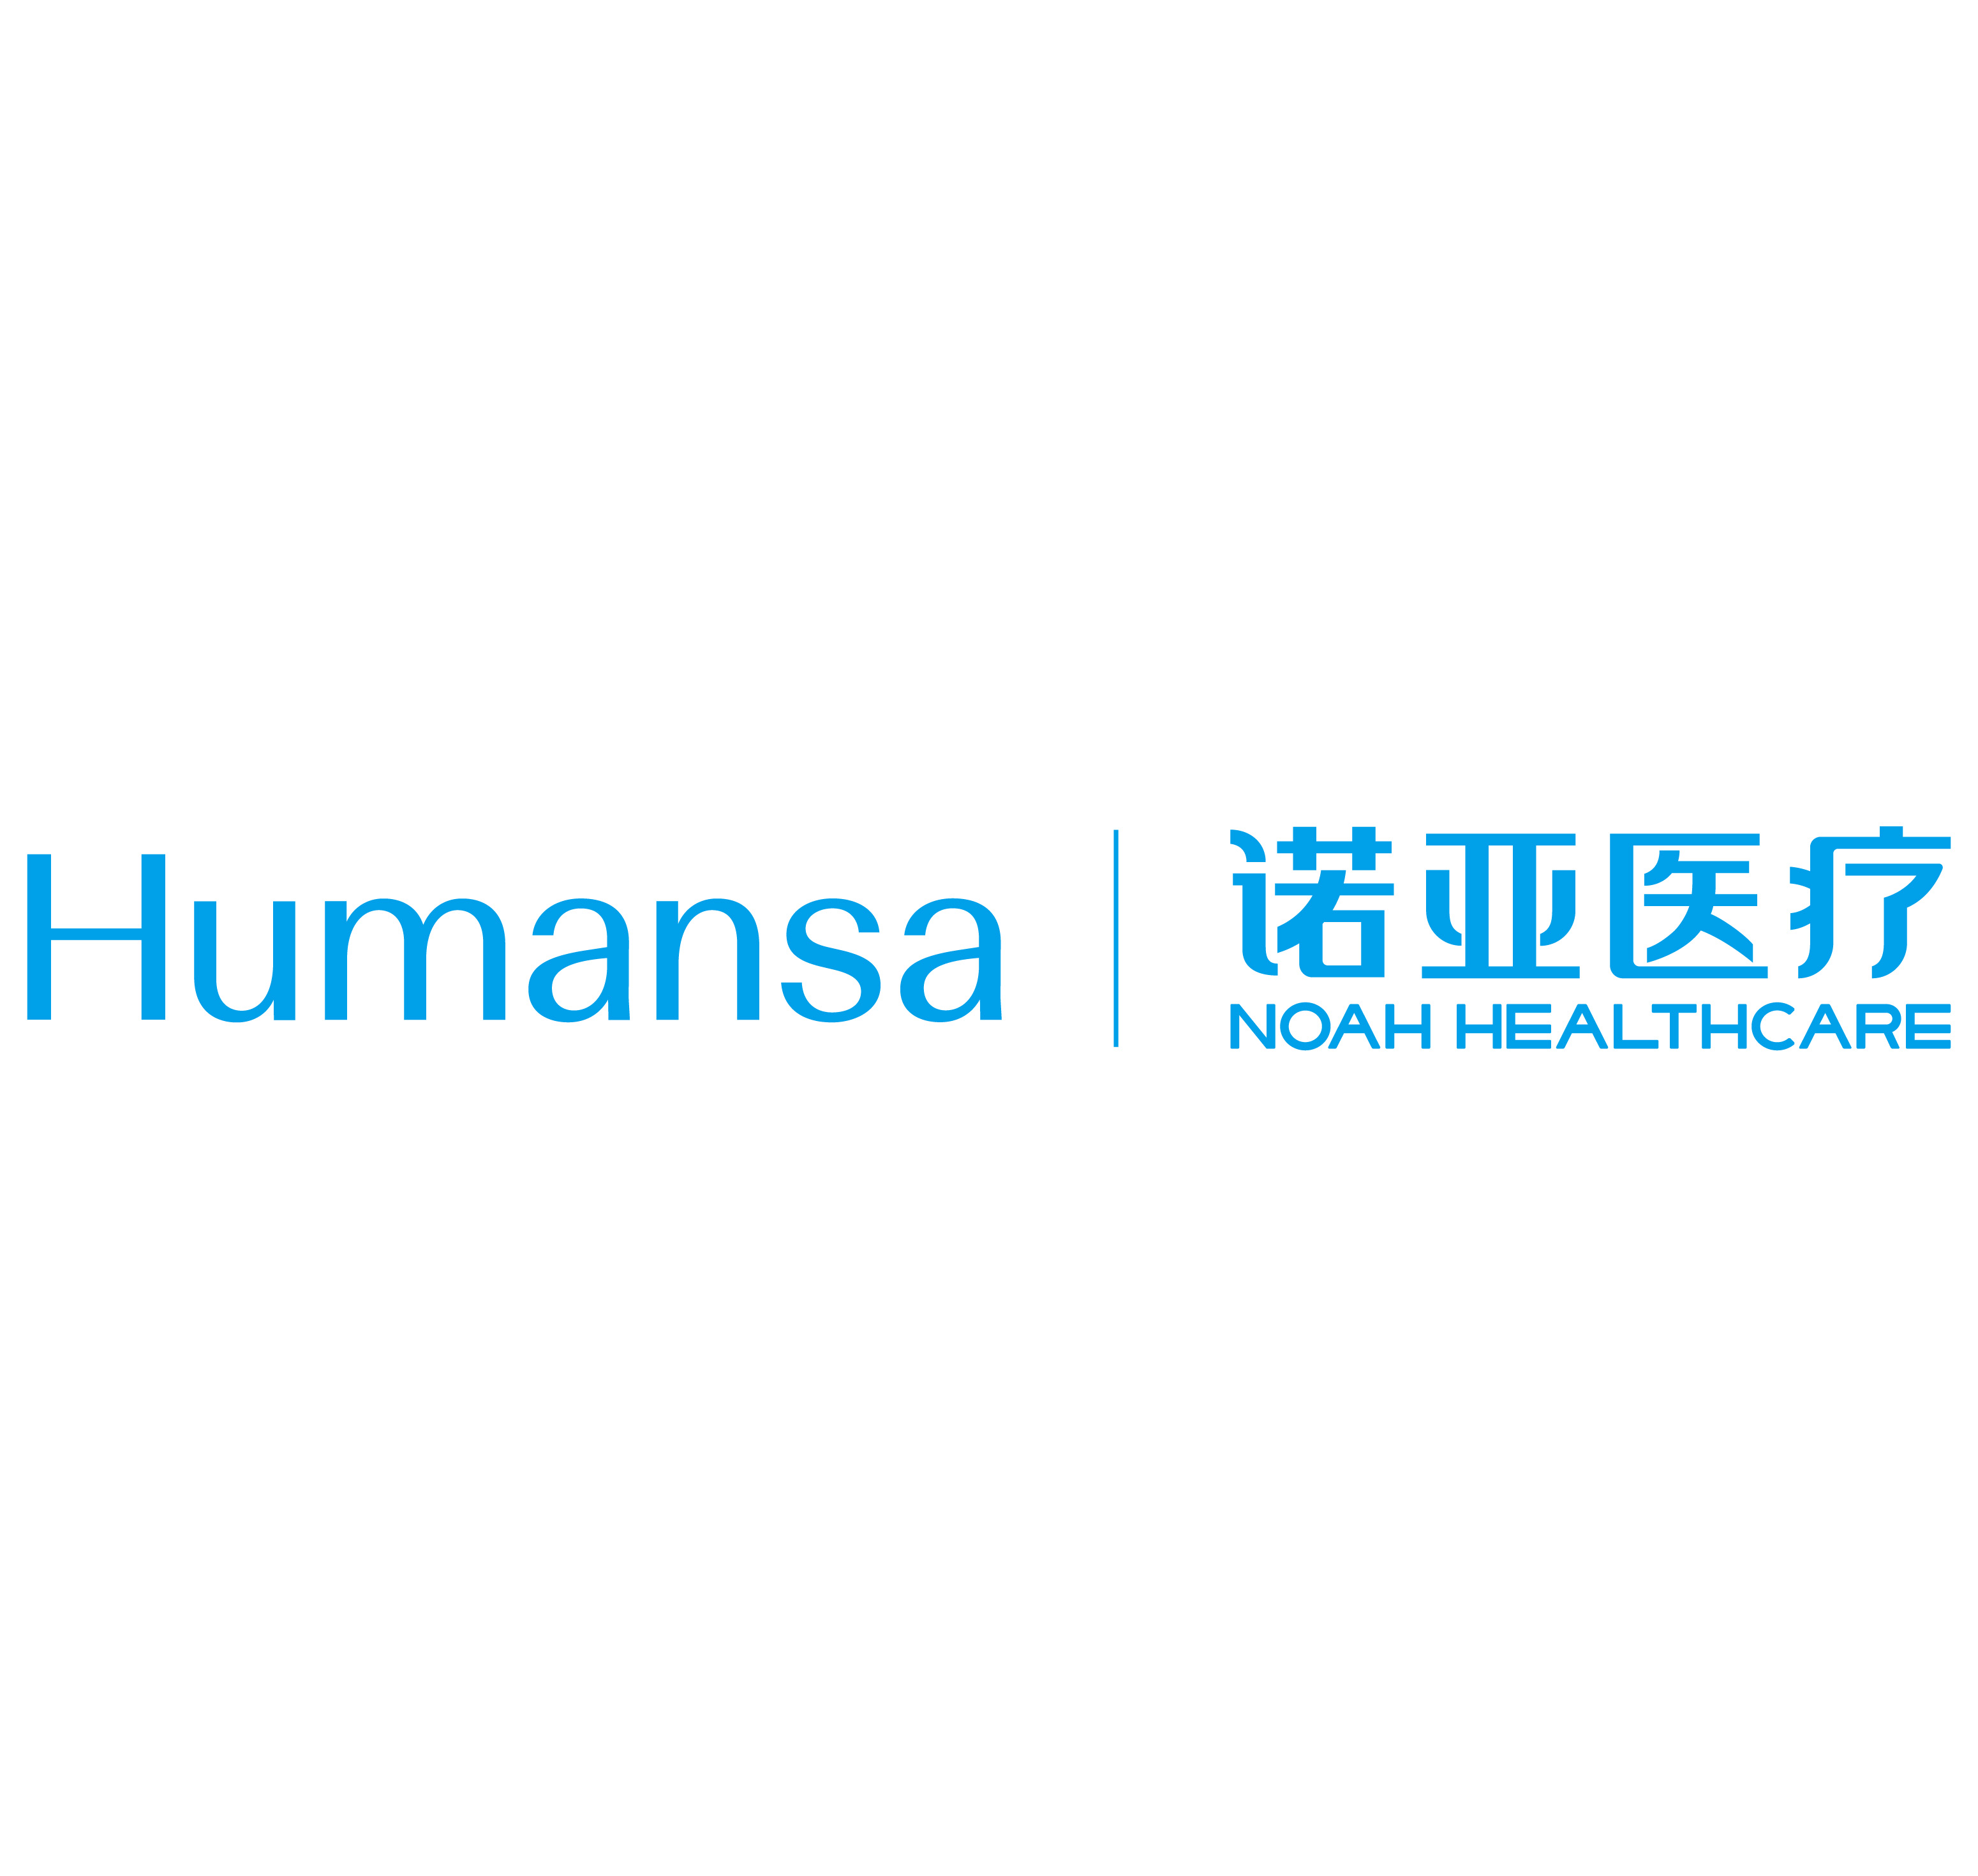 Humansa-Noah 诺亚医疗门诊部 -首页